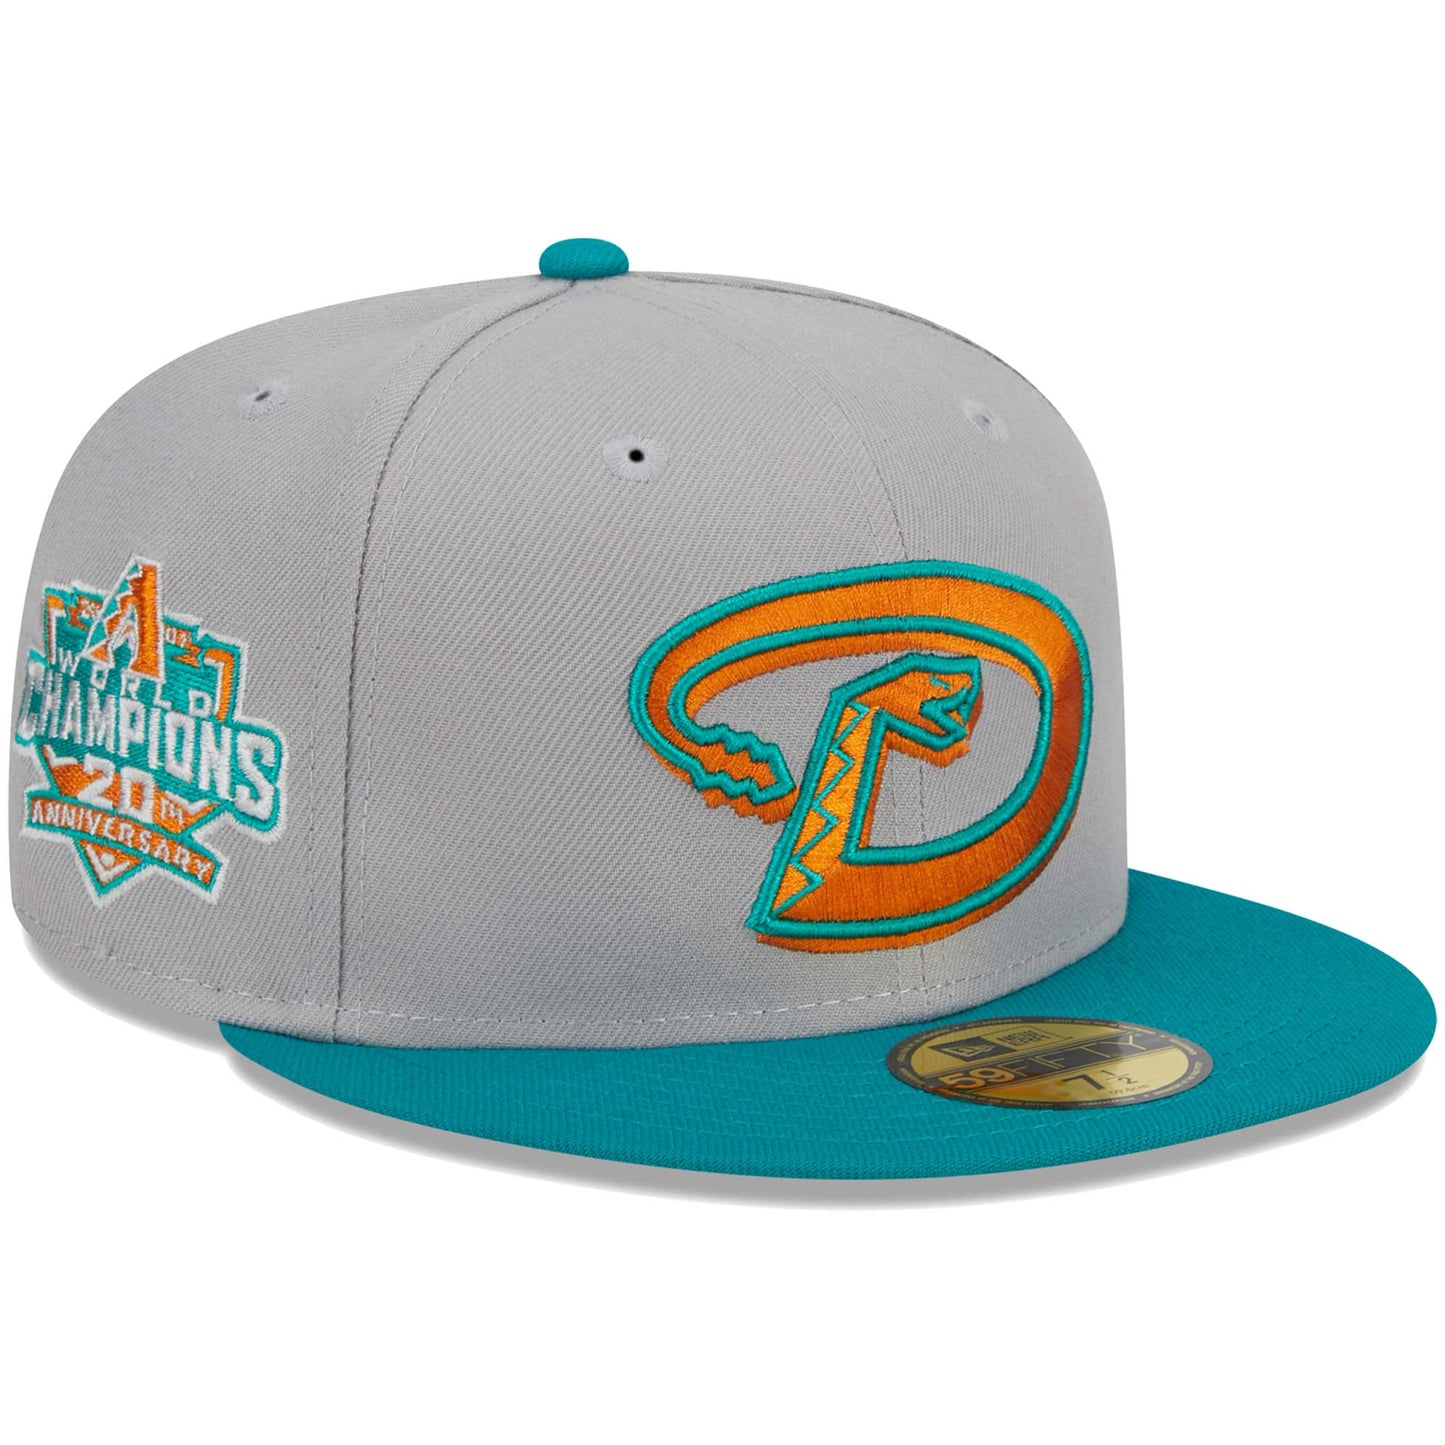 Arizona Diamondbacks New Era 59FIFTY Fitted Hat - Gray/Teal